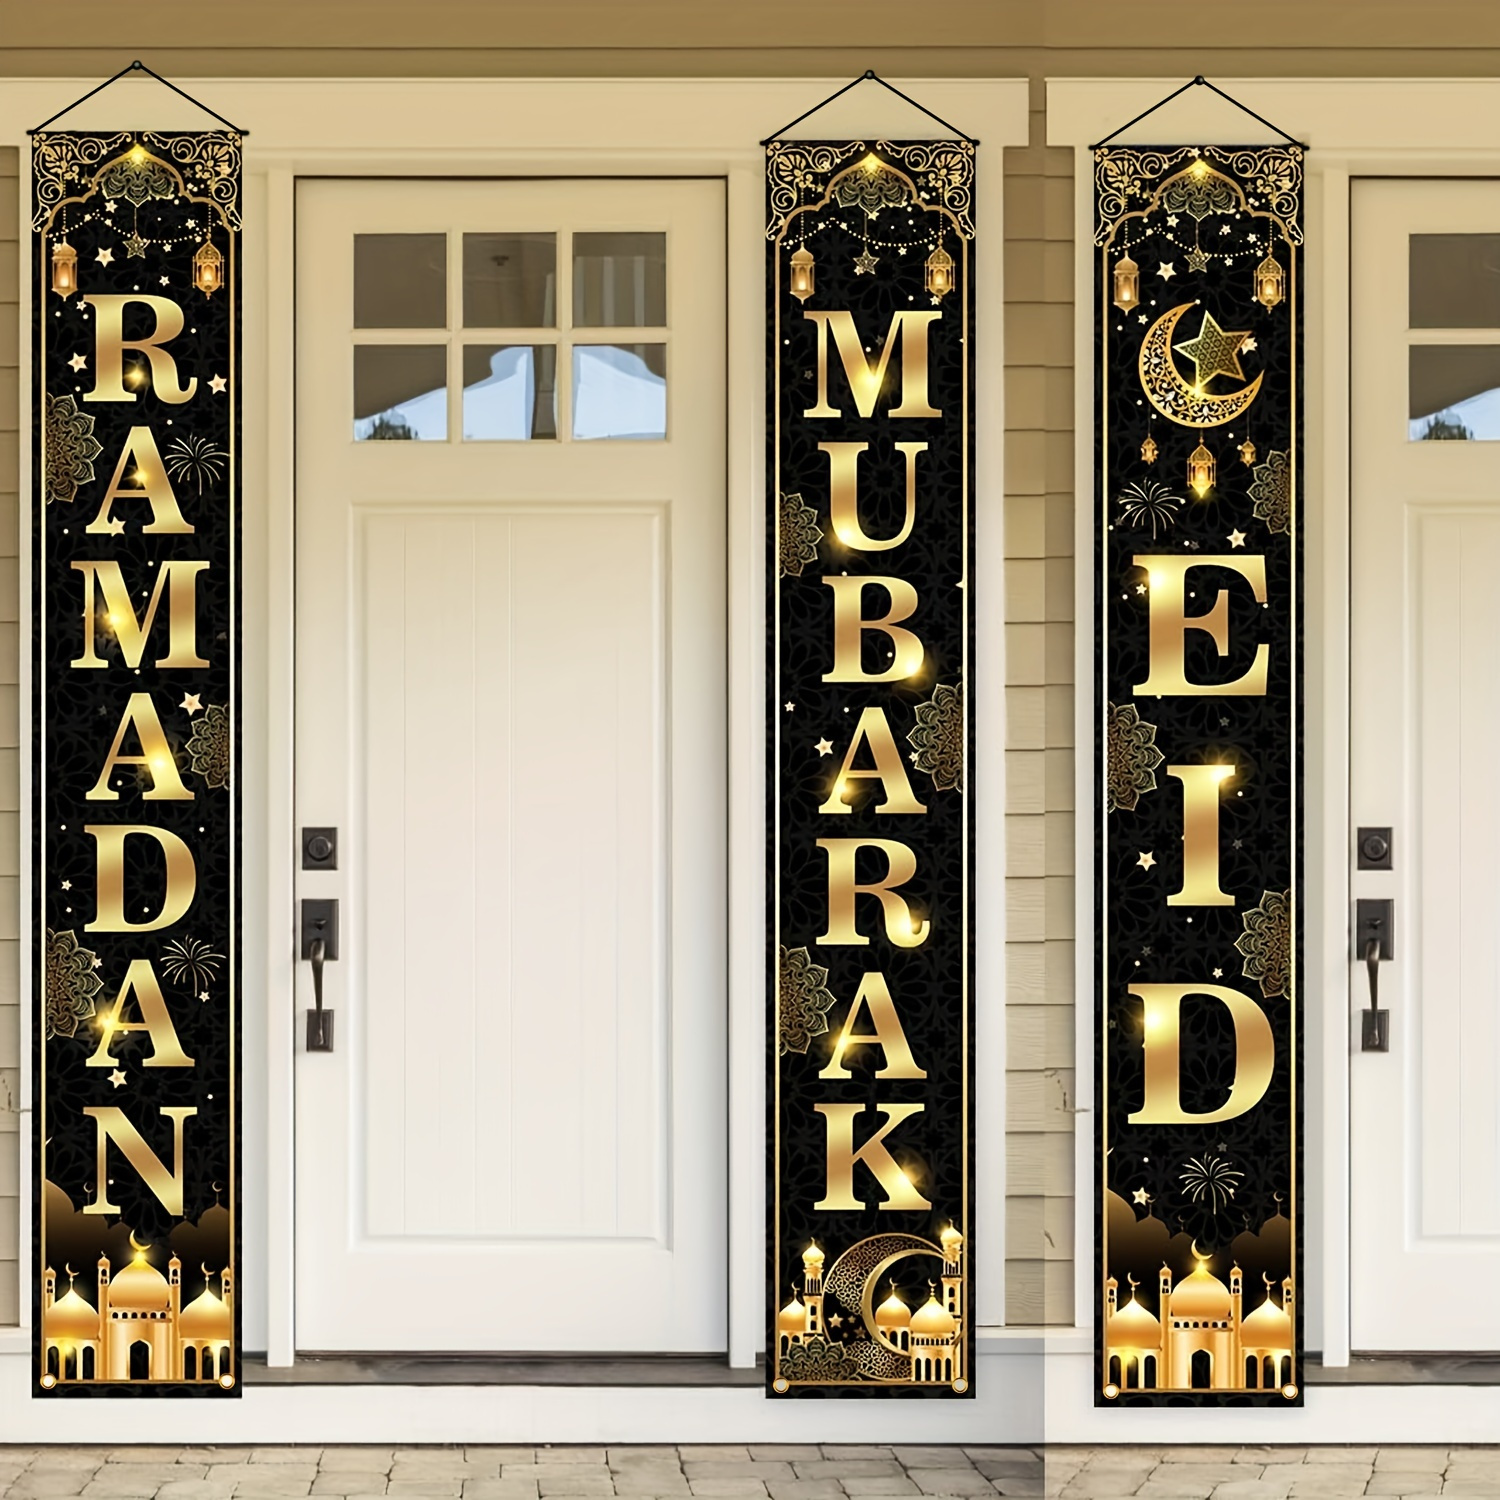  Ramadan wreath - Ramadan Decorations for home 2024 - Ramadan  mubarak sign (12 inches) - Ramadan Decorations for home - Ramadan decor -  Ramadan gifts - Ramadan door decoration - Ramadan sign : Home & Kitchen